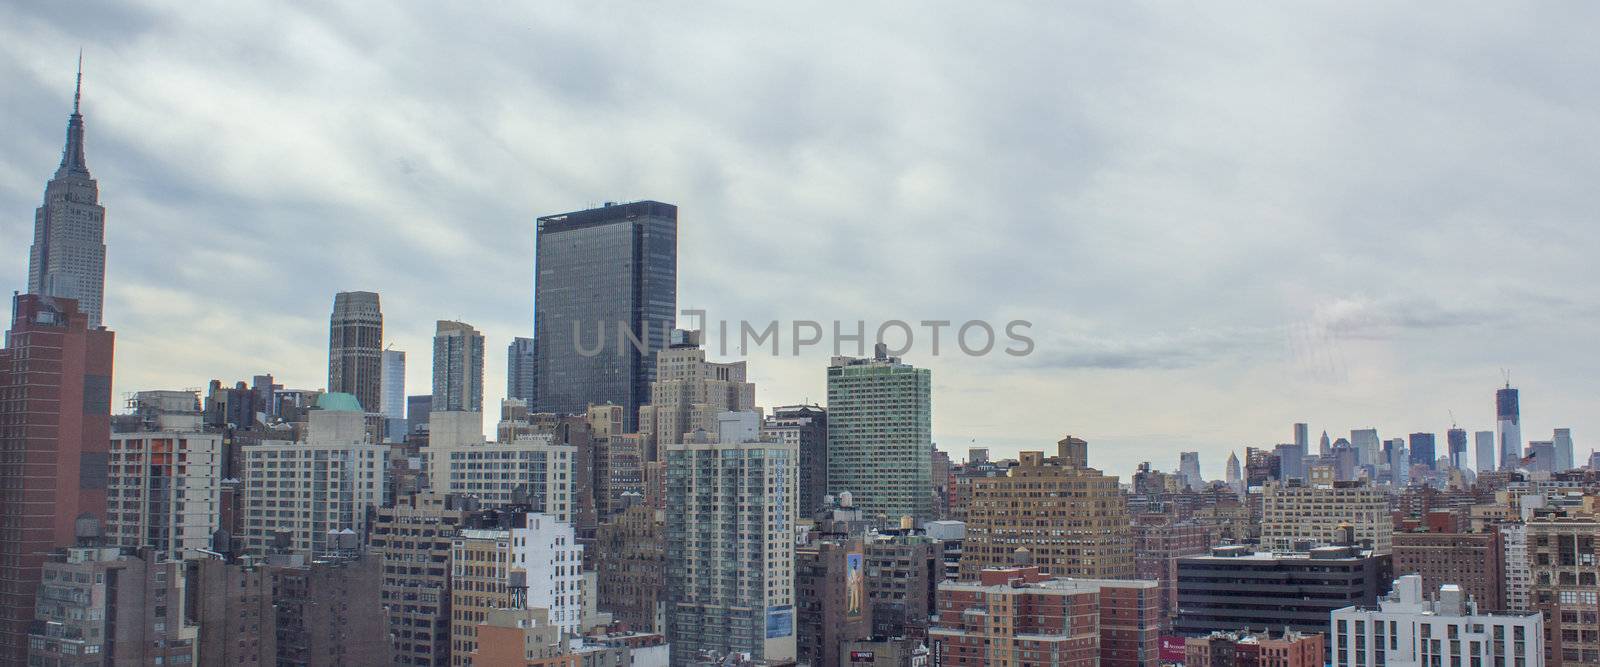 Aerial view of New York City Skyline by jovannig